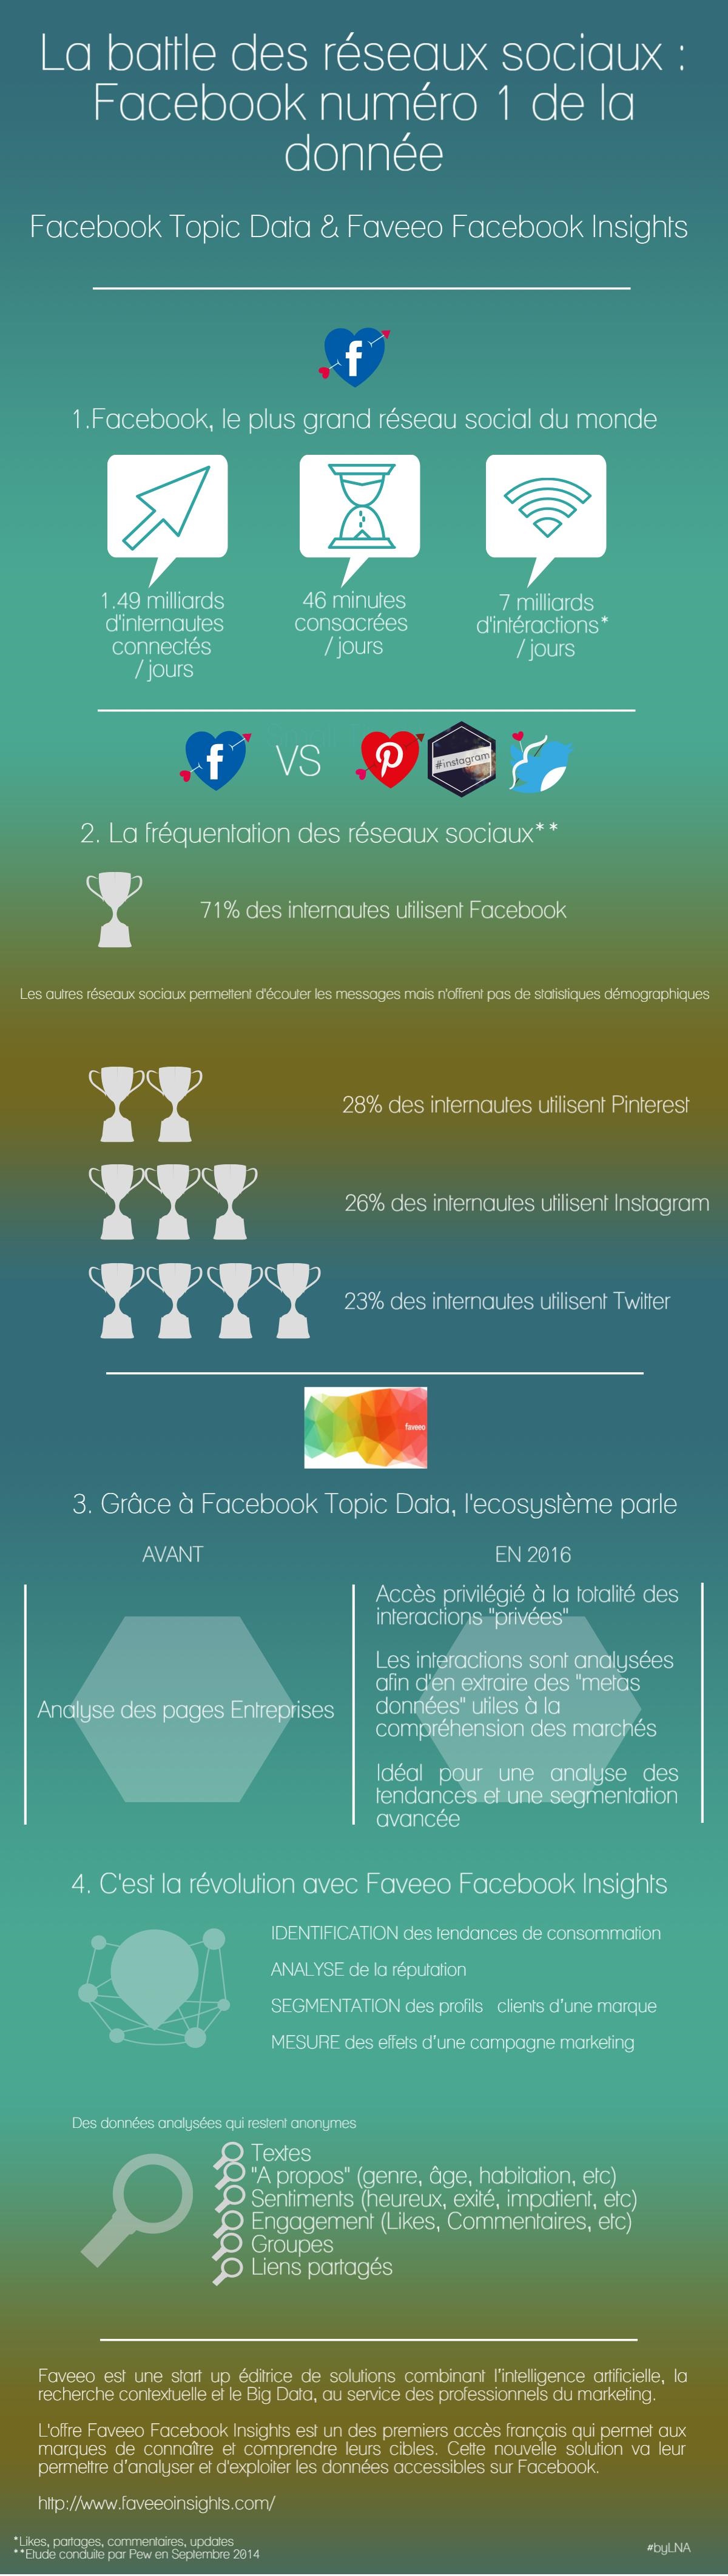 Infographie_FaveeoFacebookInsights